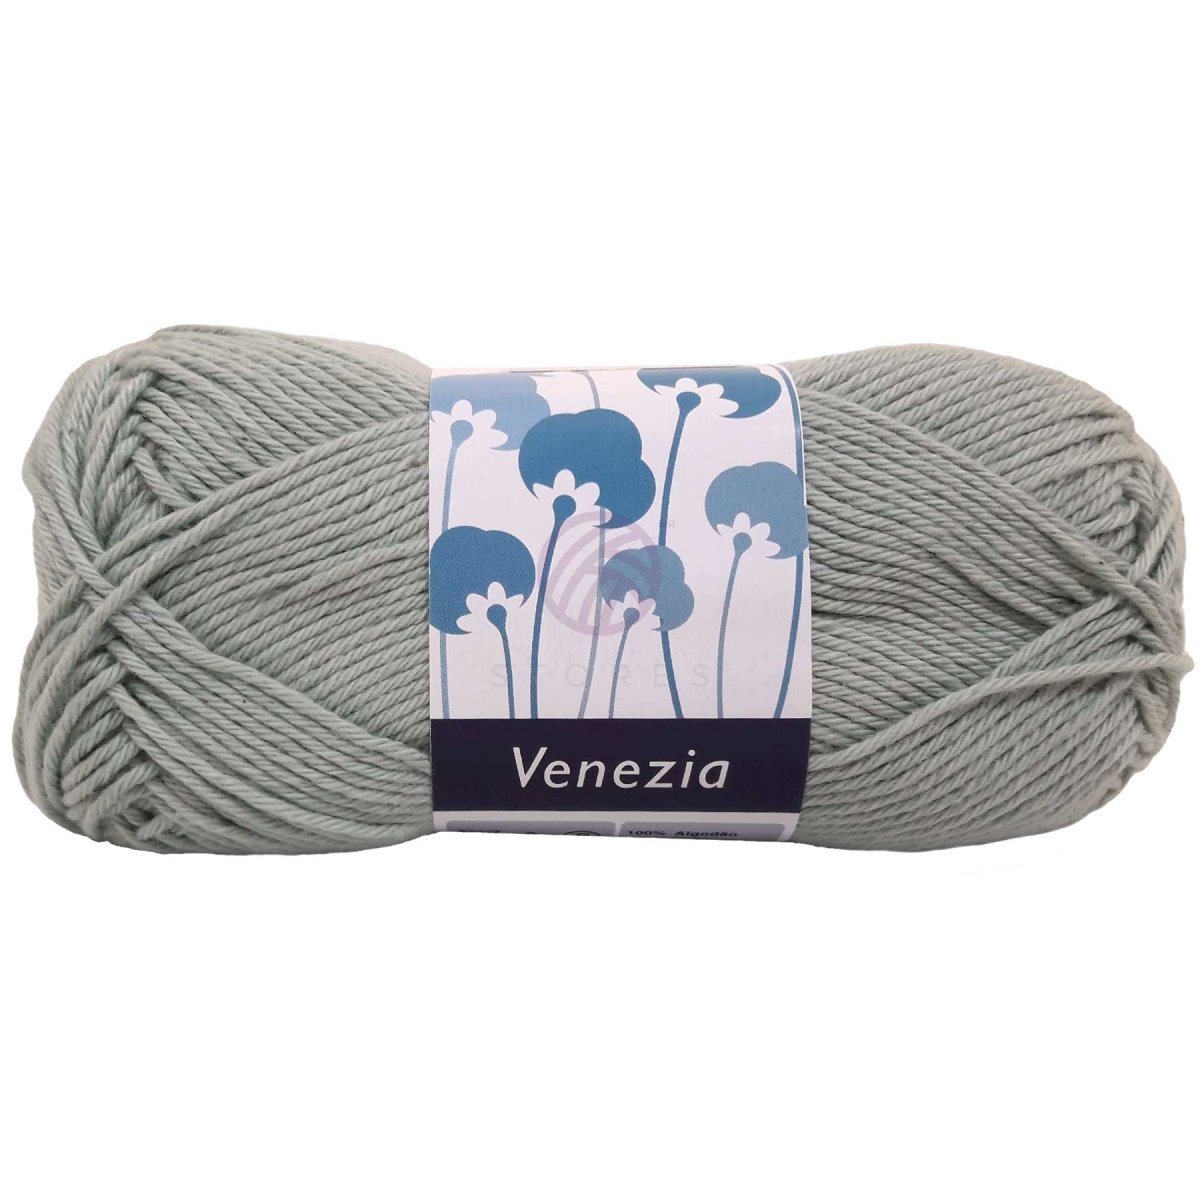 VENEZIA - Crochetstores204-315606850204312